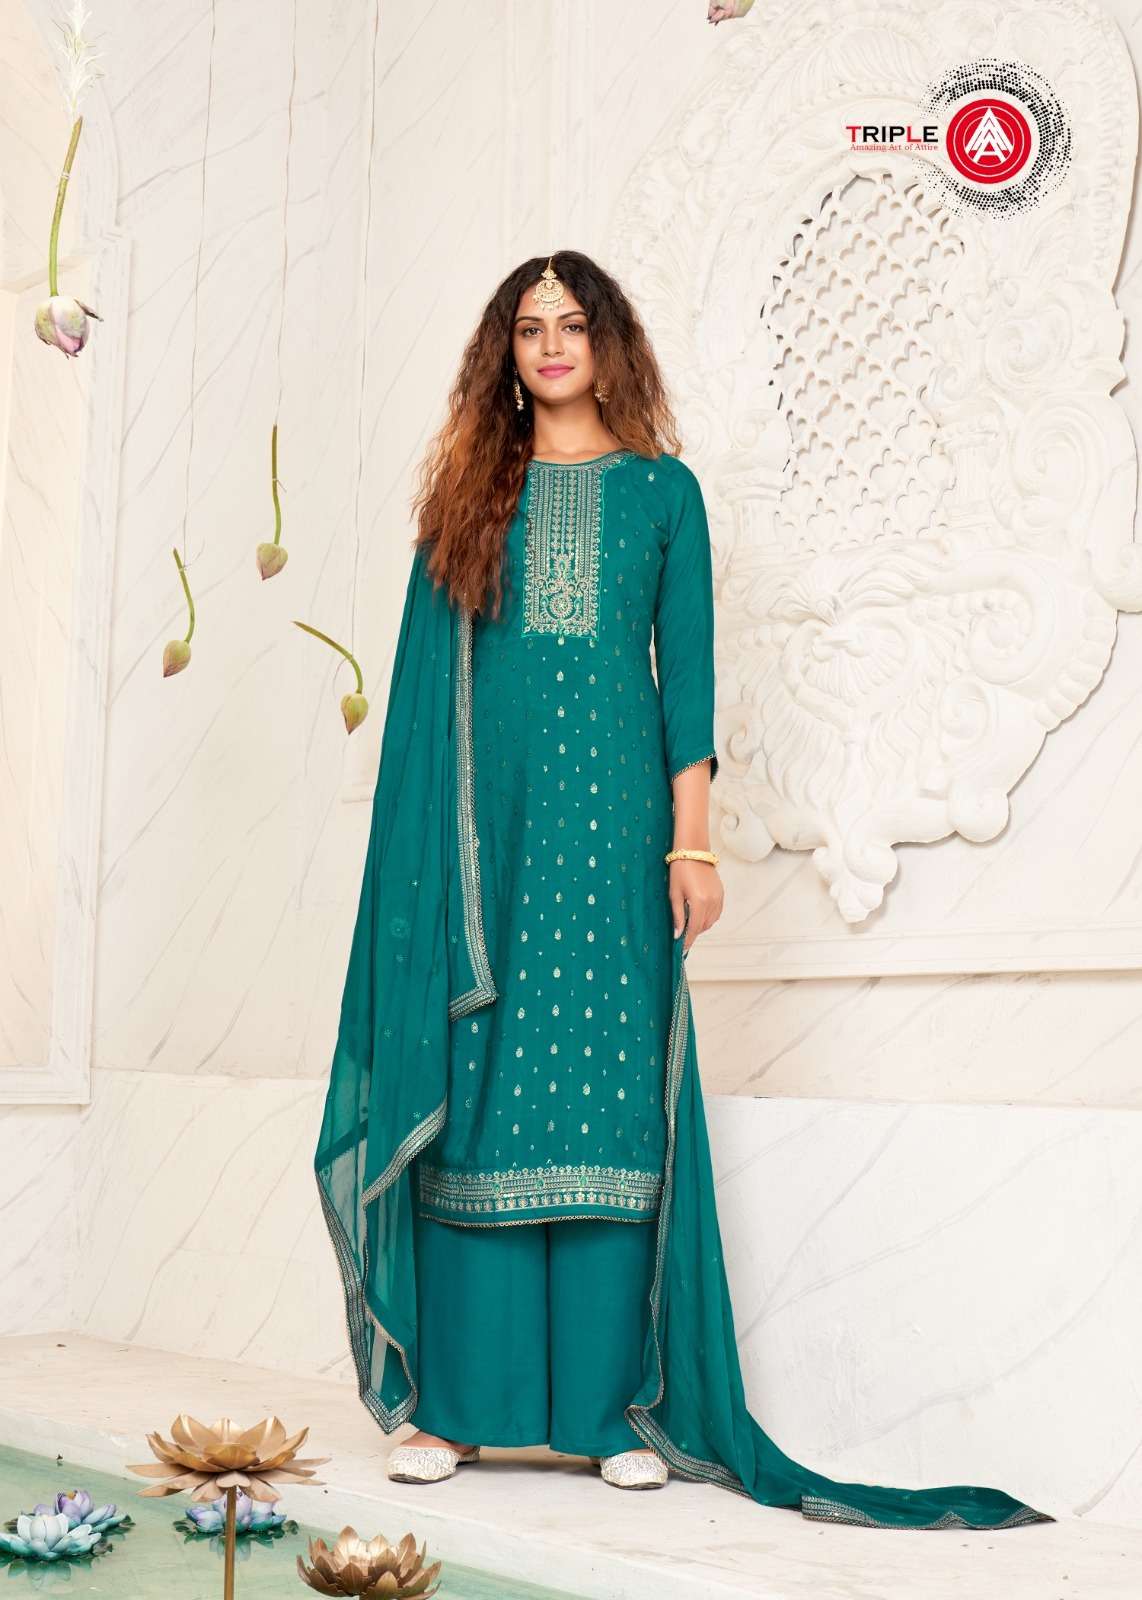 triple a aaliya 10711-10716 series latest wedding wear pakistani salwar kameez wholesaler surat